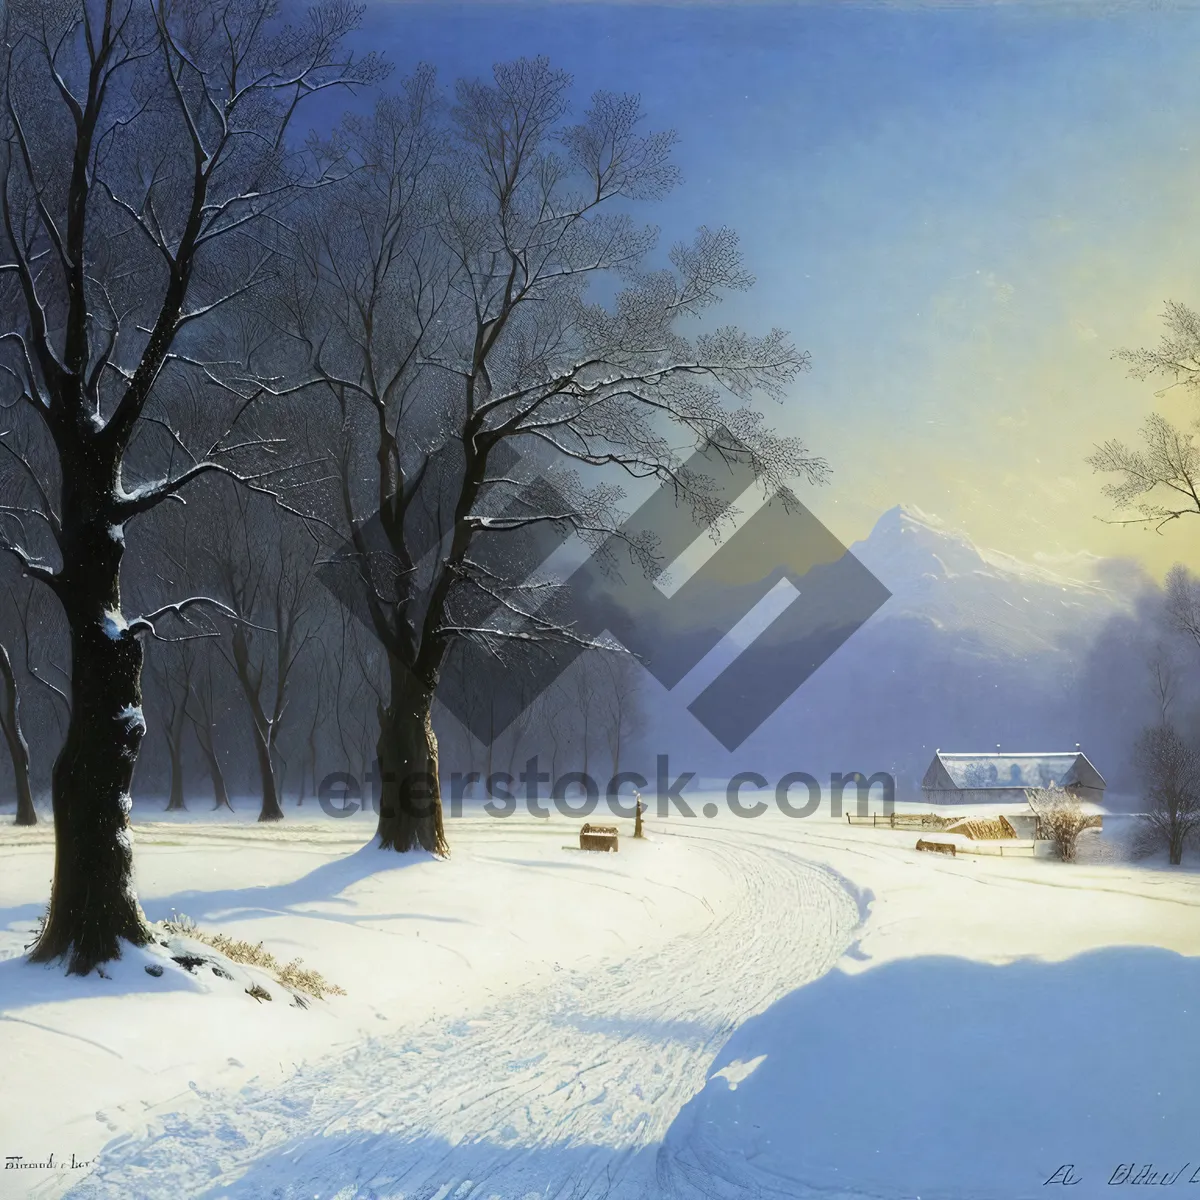 Picture of Winter Wonderland: Snowy Mountain Landscape